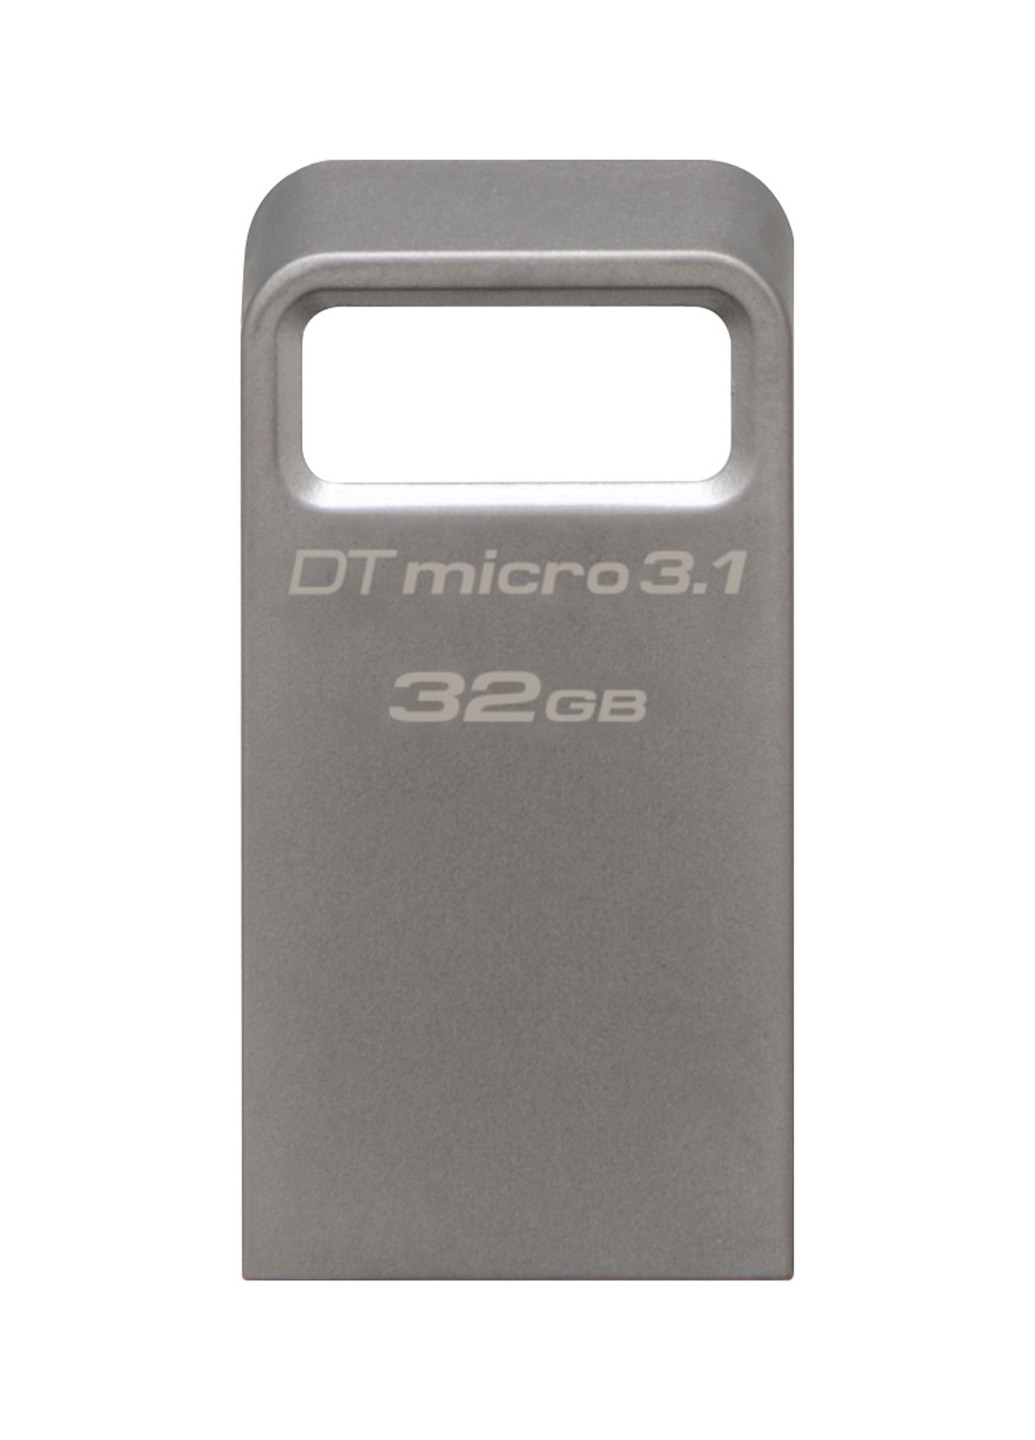 Флеш память USB DataTraveler Micro 3.1 32GB Metal Silver USB 3.1 (DTMC3/32GB) Kingston флеш память usb kingston datatraveler micro 3.1 32gb metal silver usb 3.1 (dtmc3/32gb) (133708837)